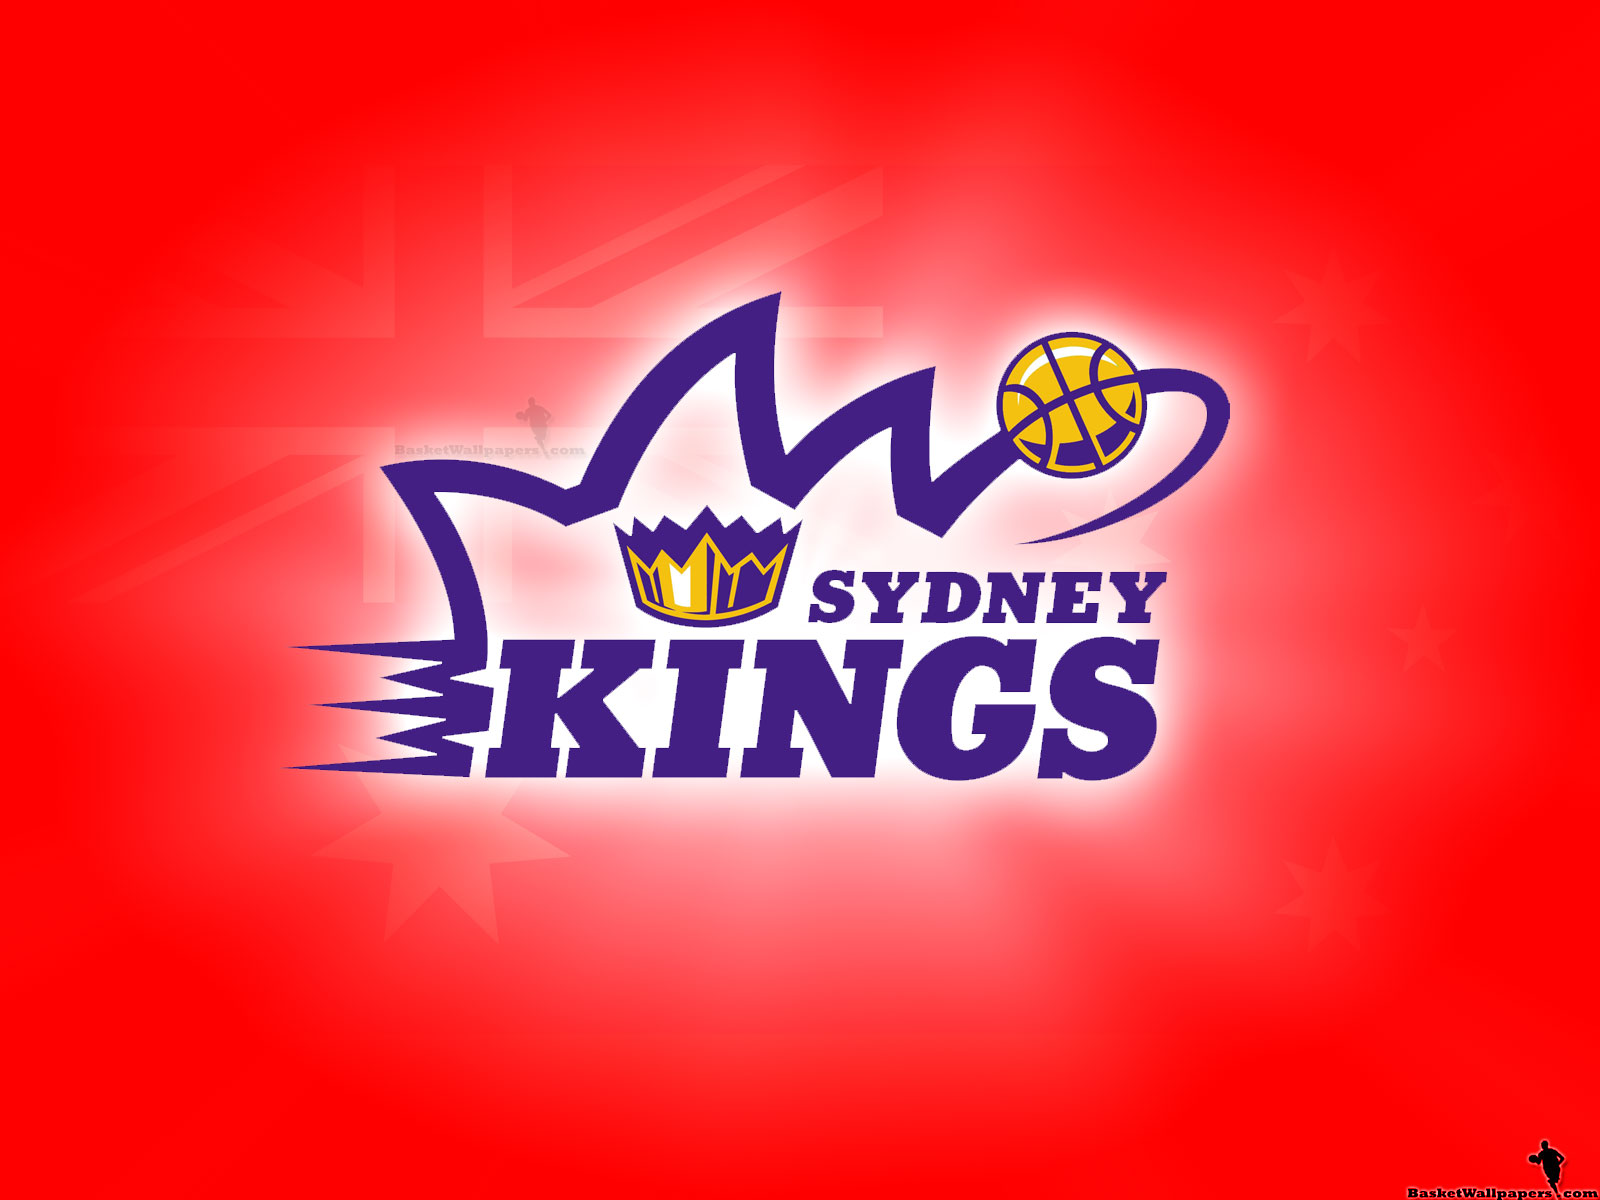 Sydney Kings Backgrounds, Compatible - PC, Mobile, Gadgets| 1600x1200 px